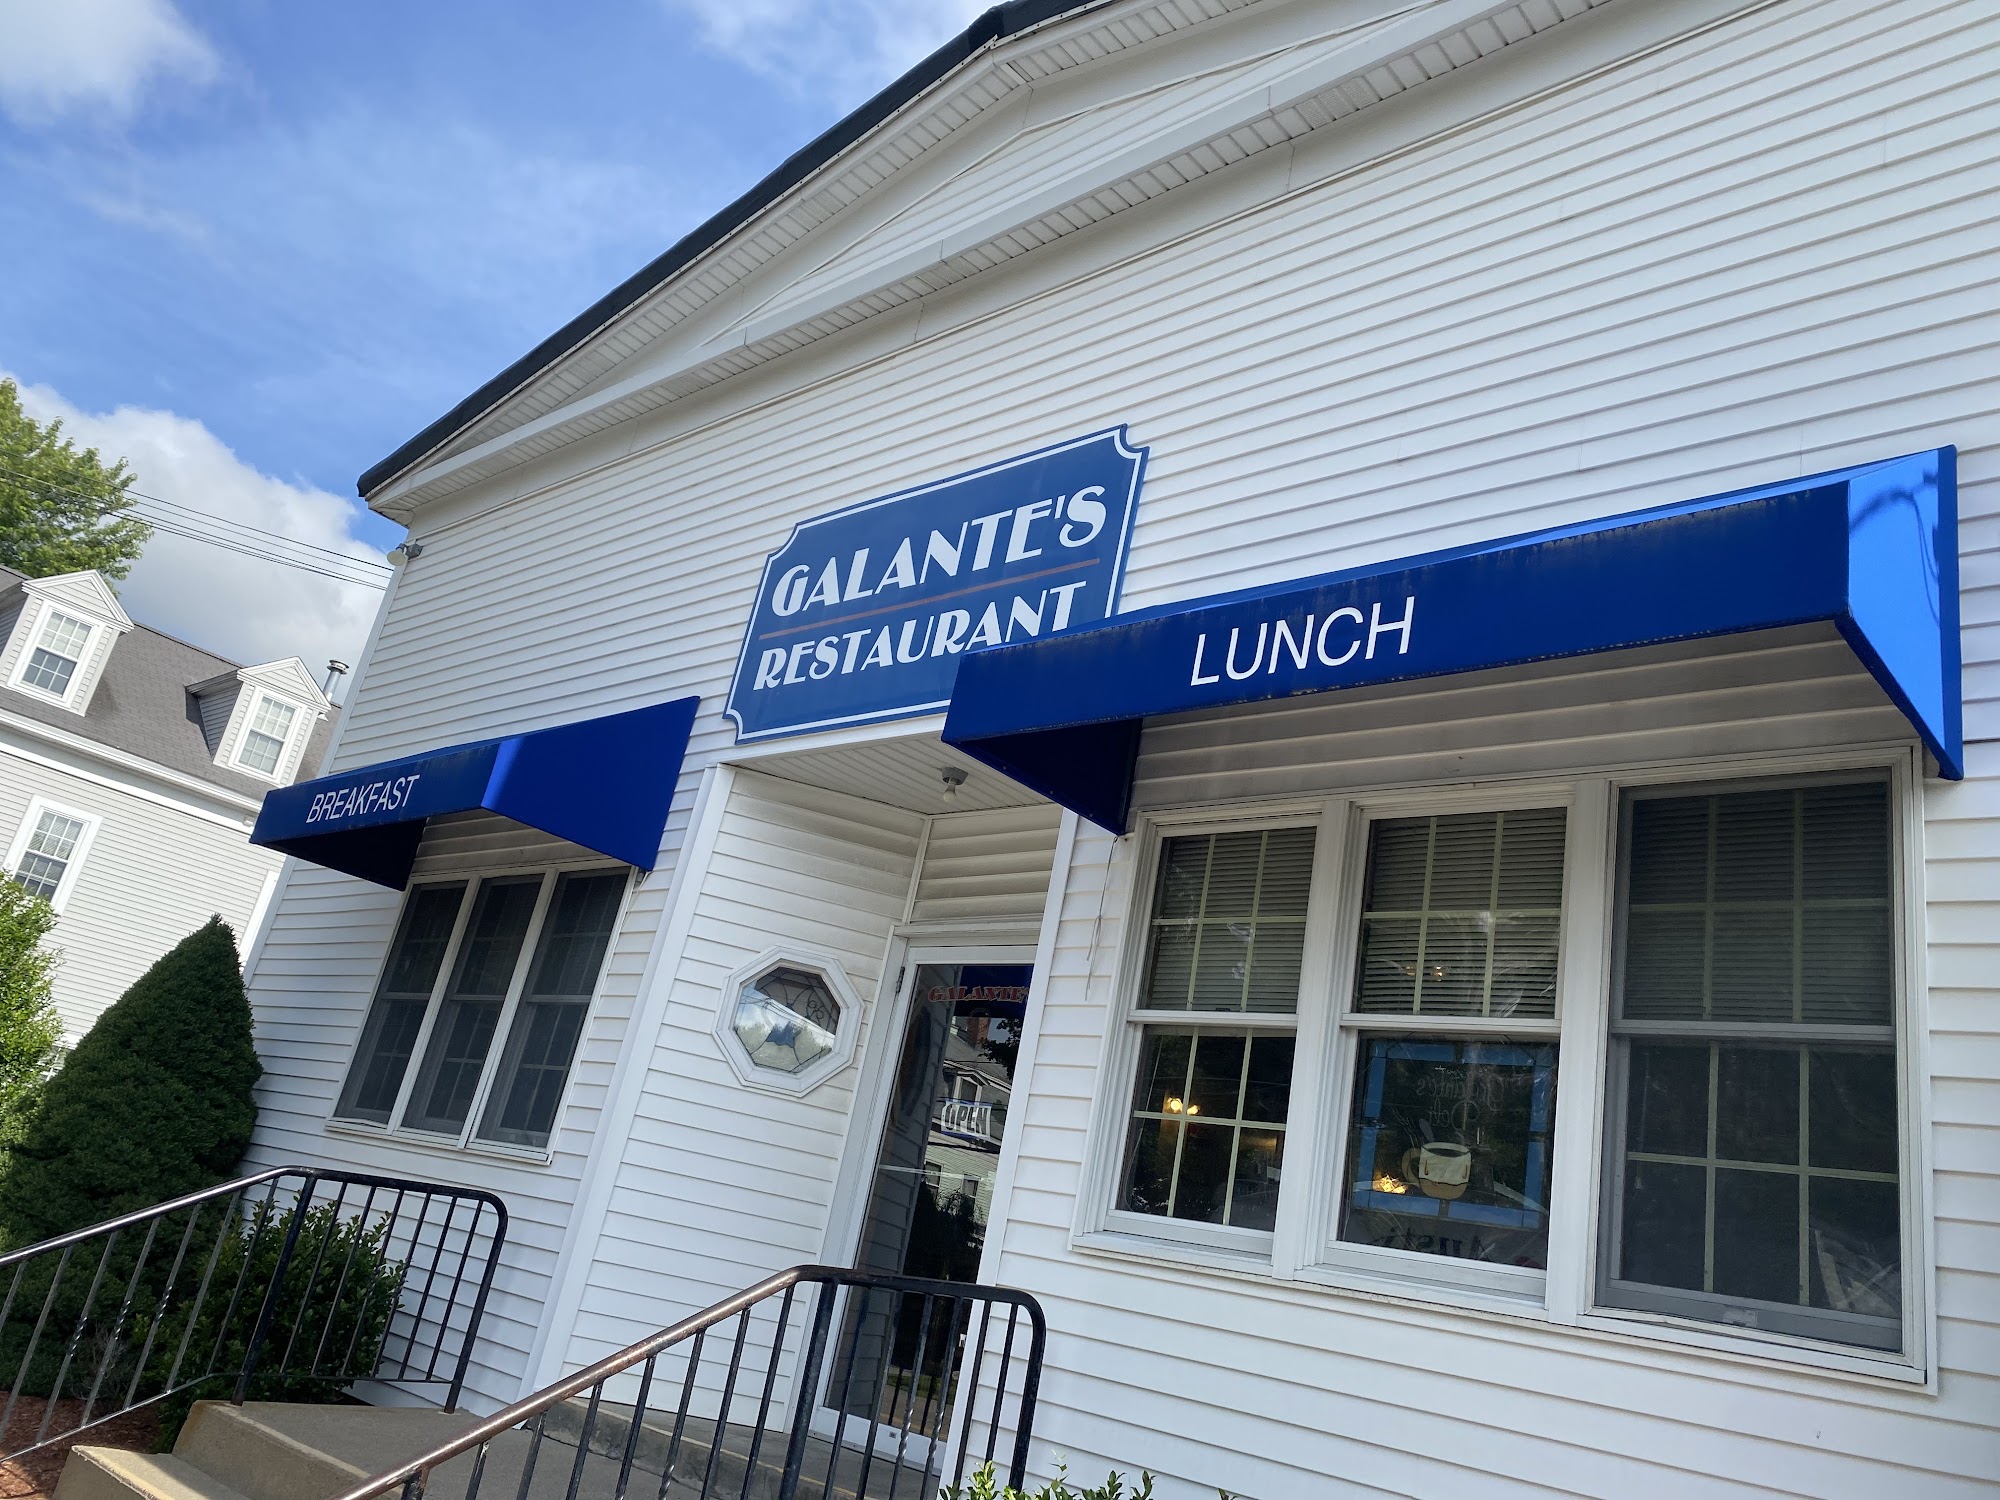 Galante’s Restaurant